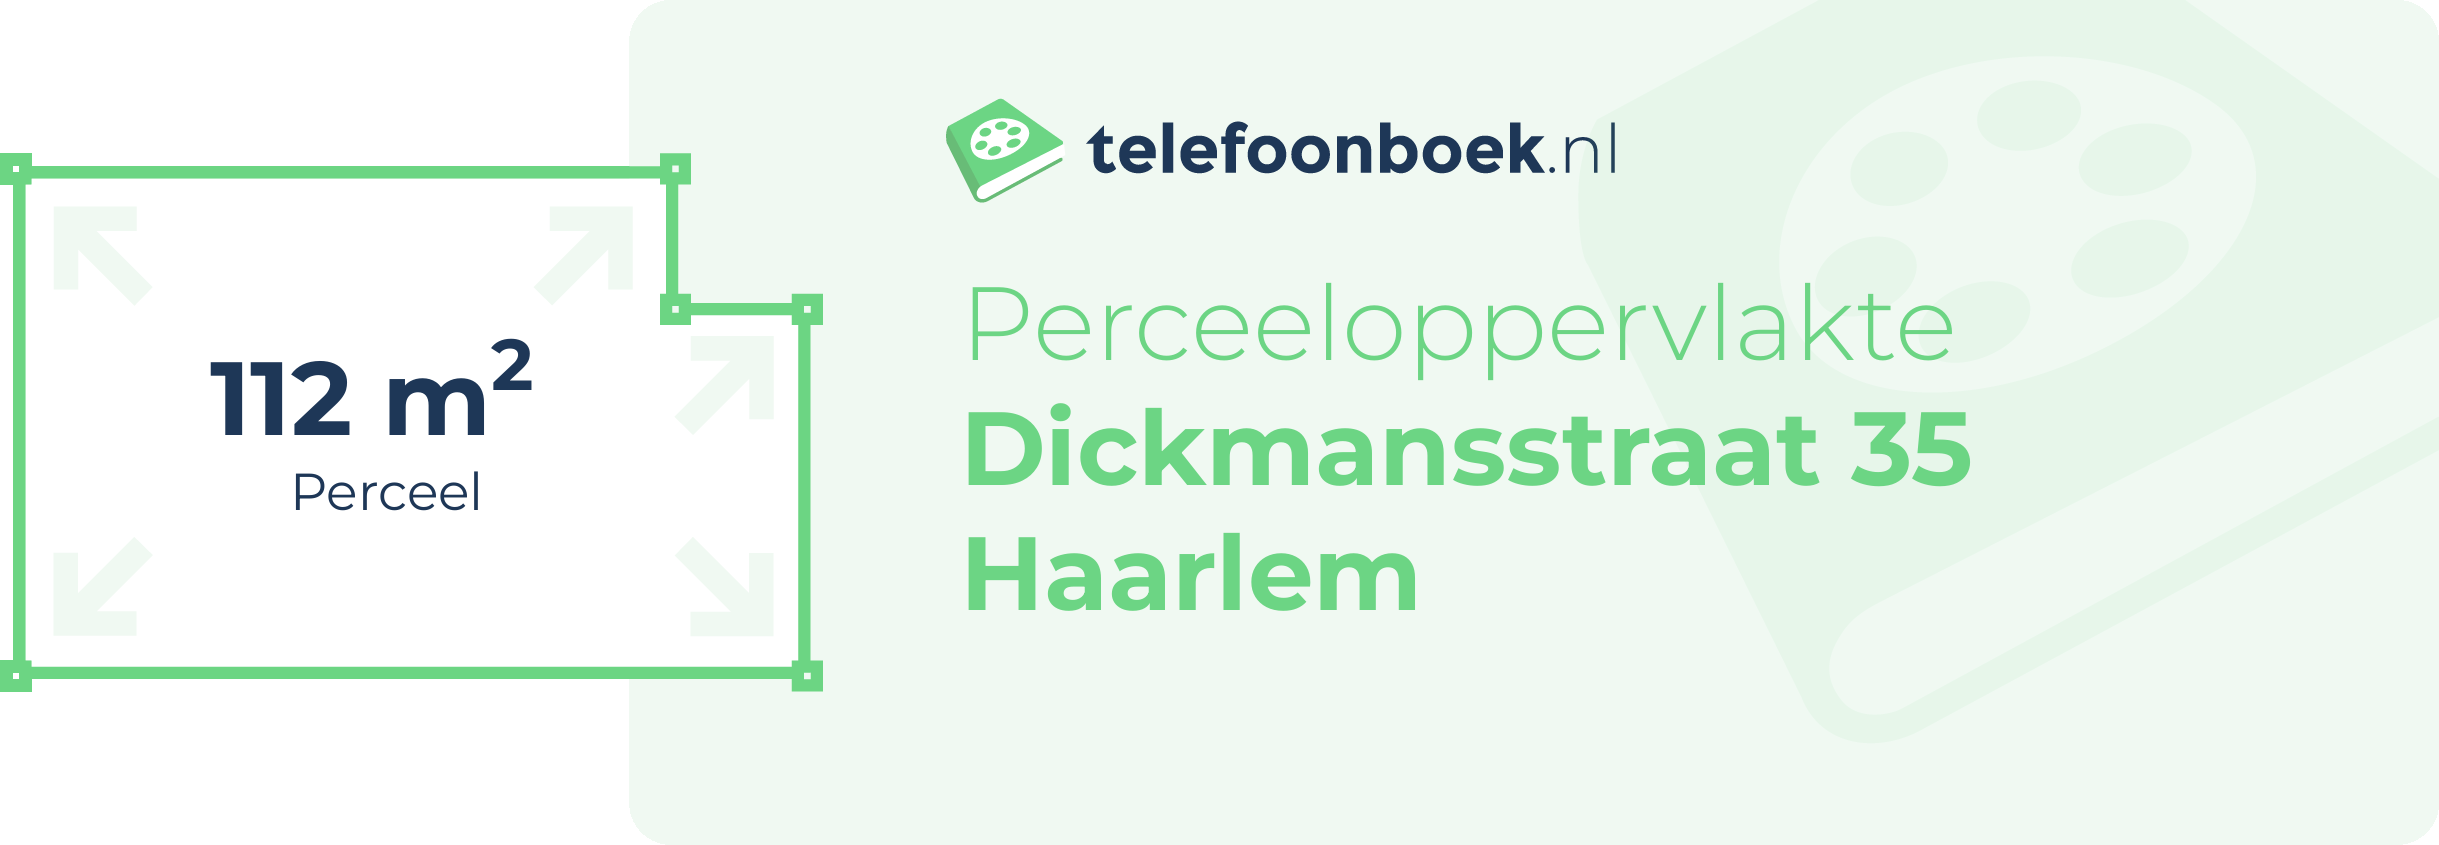 Perceeloppervlakte Dickmansstraat 35 Haarlem